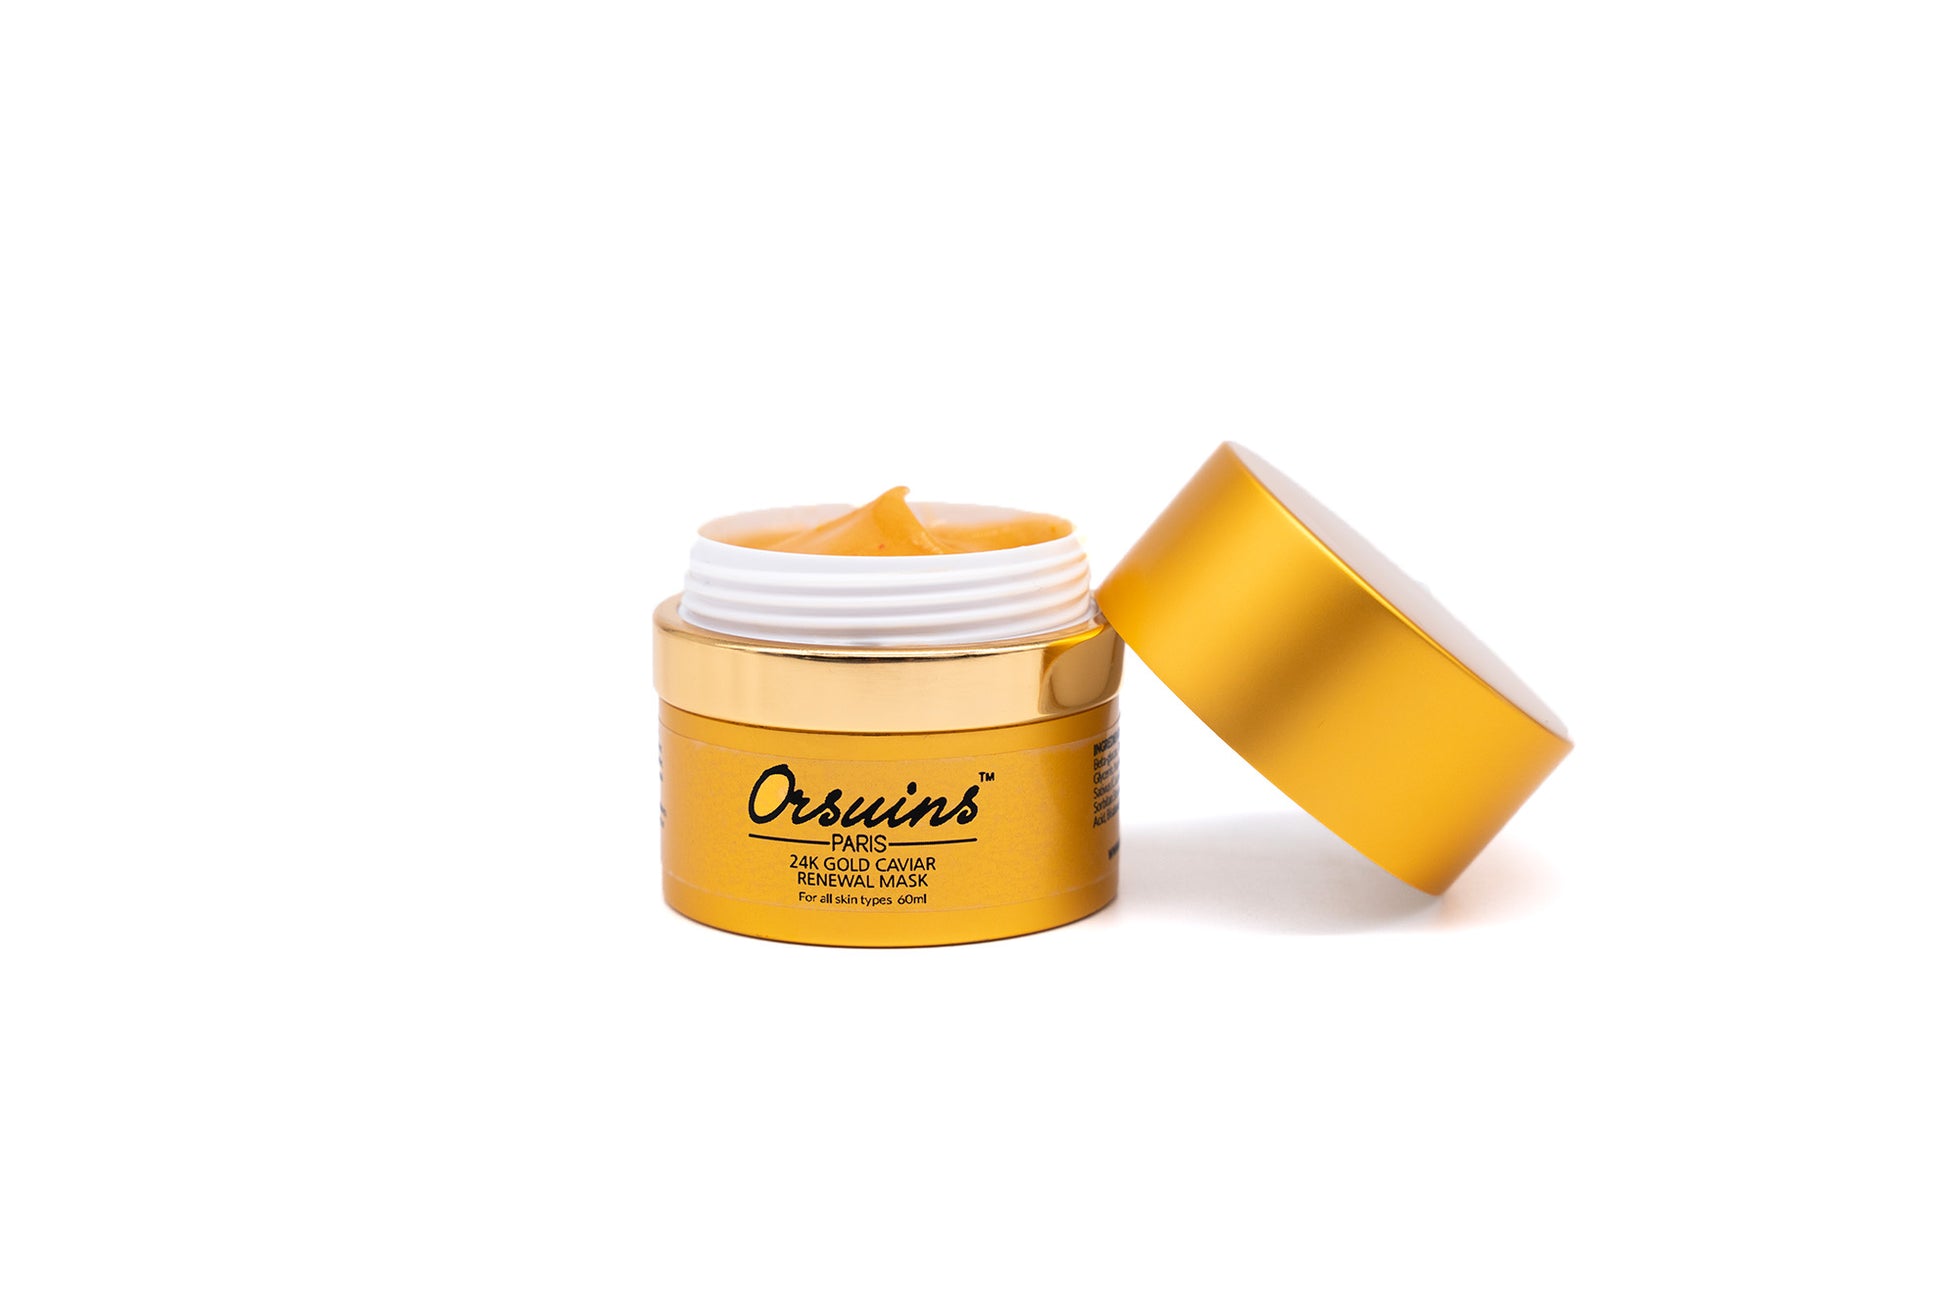 Renewal Mask - Orsuins Skin Care